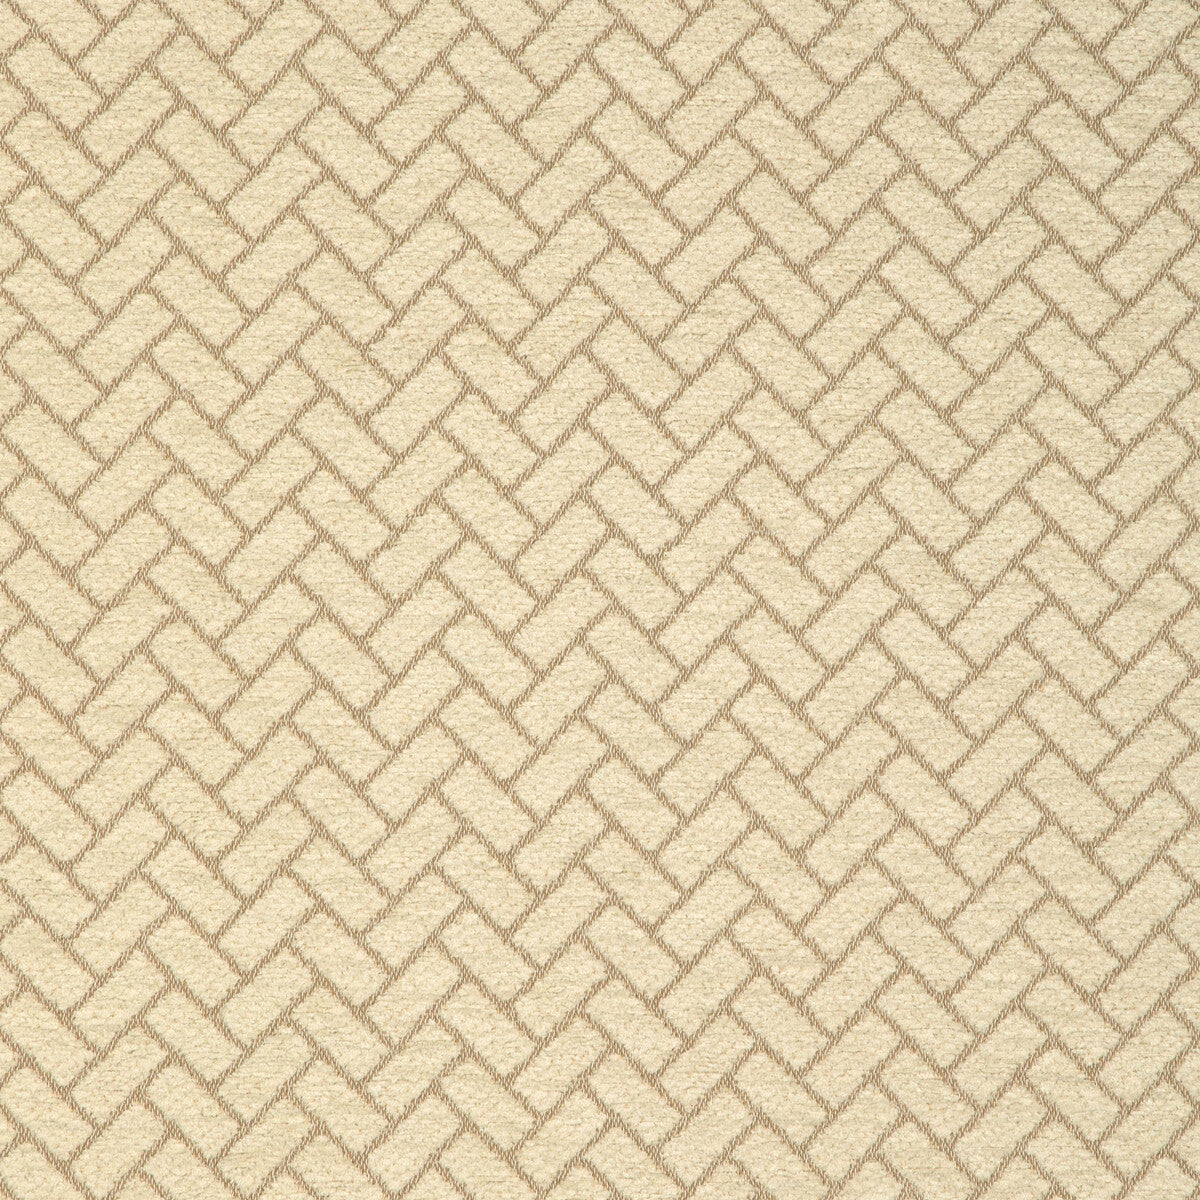 Kravet Smart fabric in 37003-116 color - pattern 37003.116.0 - by Kravet Smart in the Pavilion collection